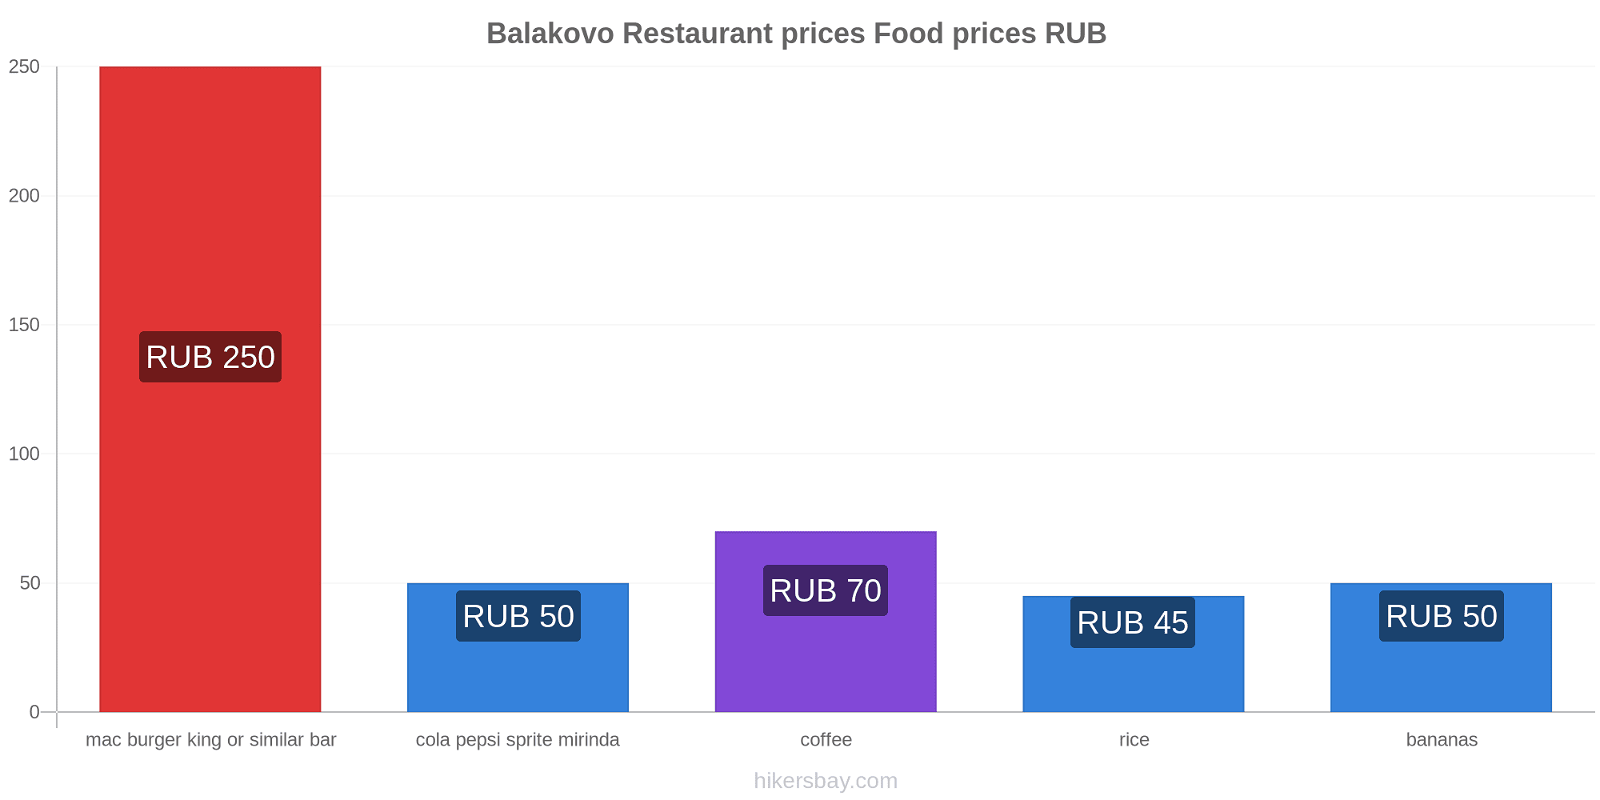 Balakovo price changes hikersbay.com